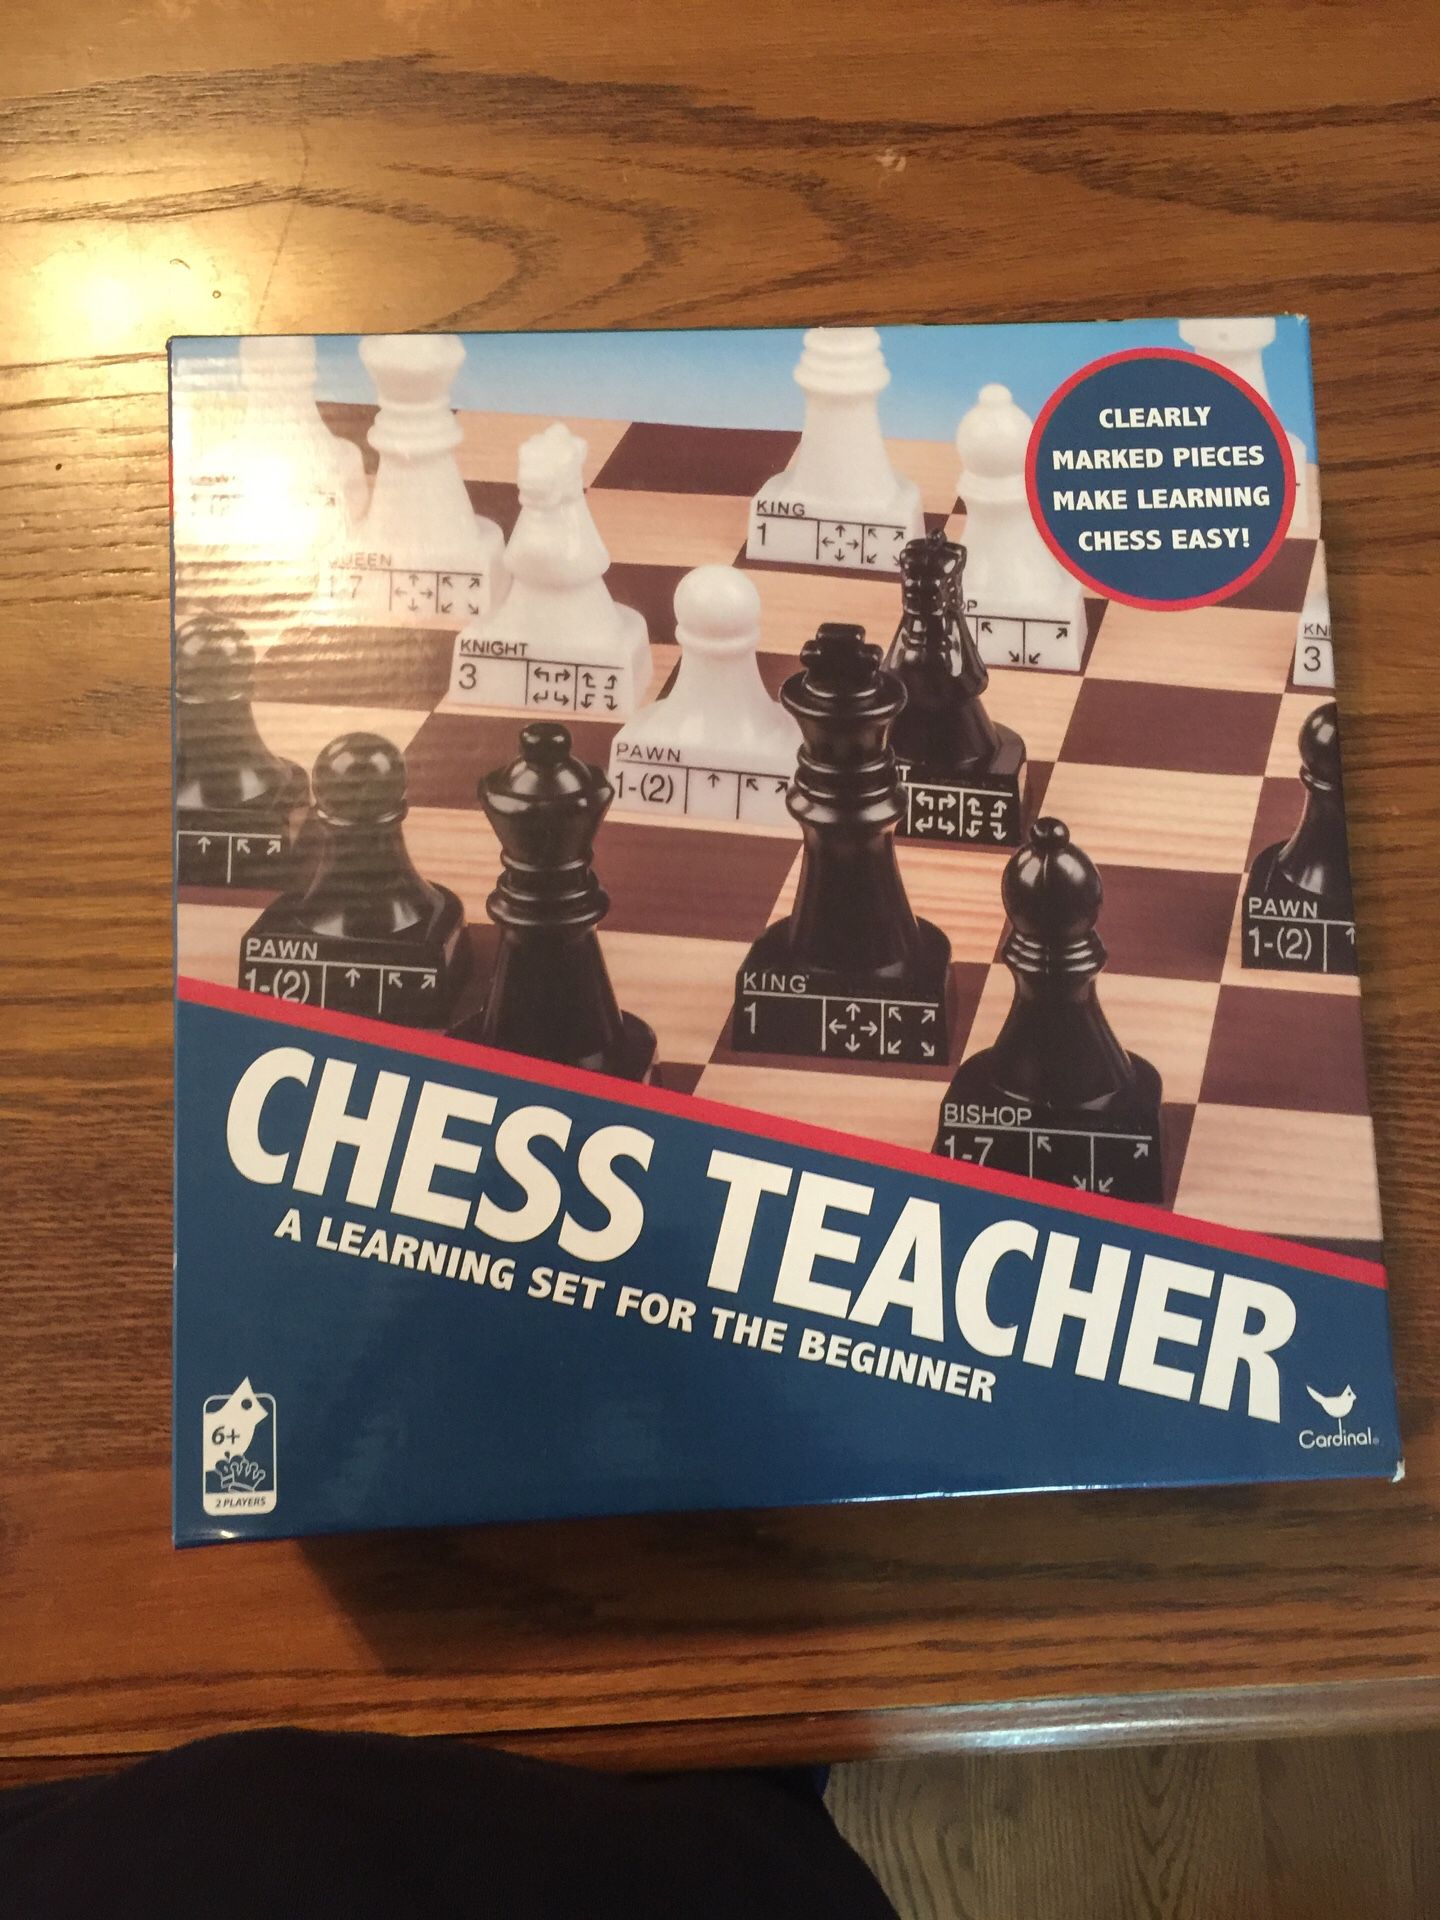 Chess teacher board game